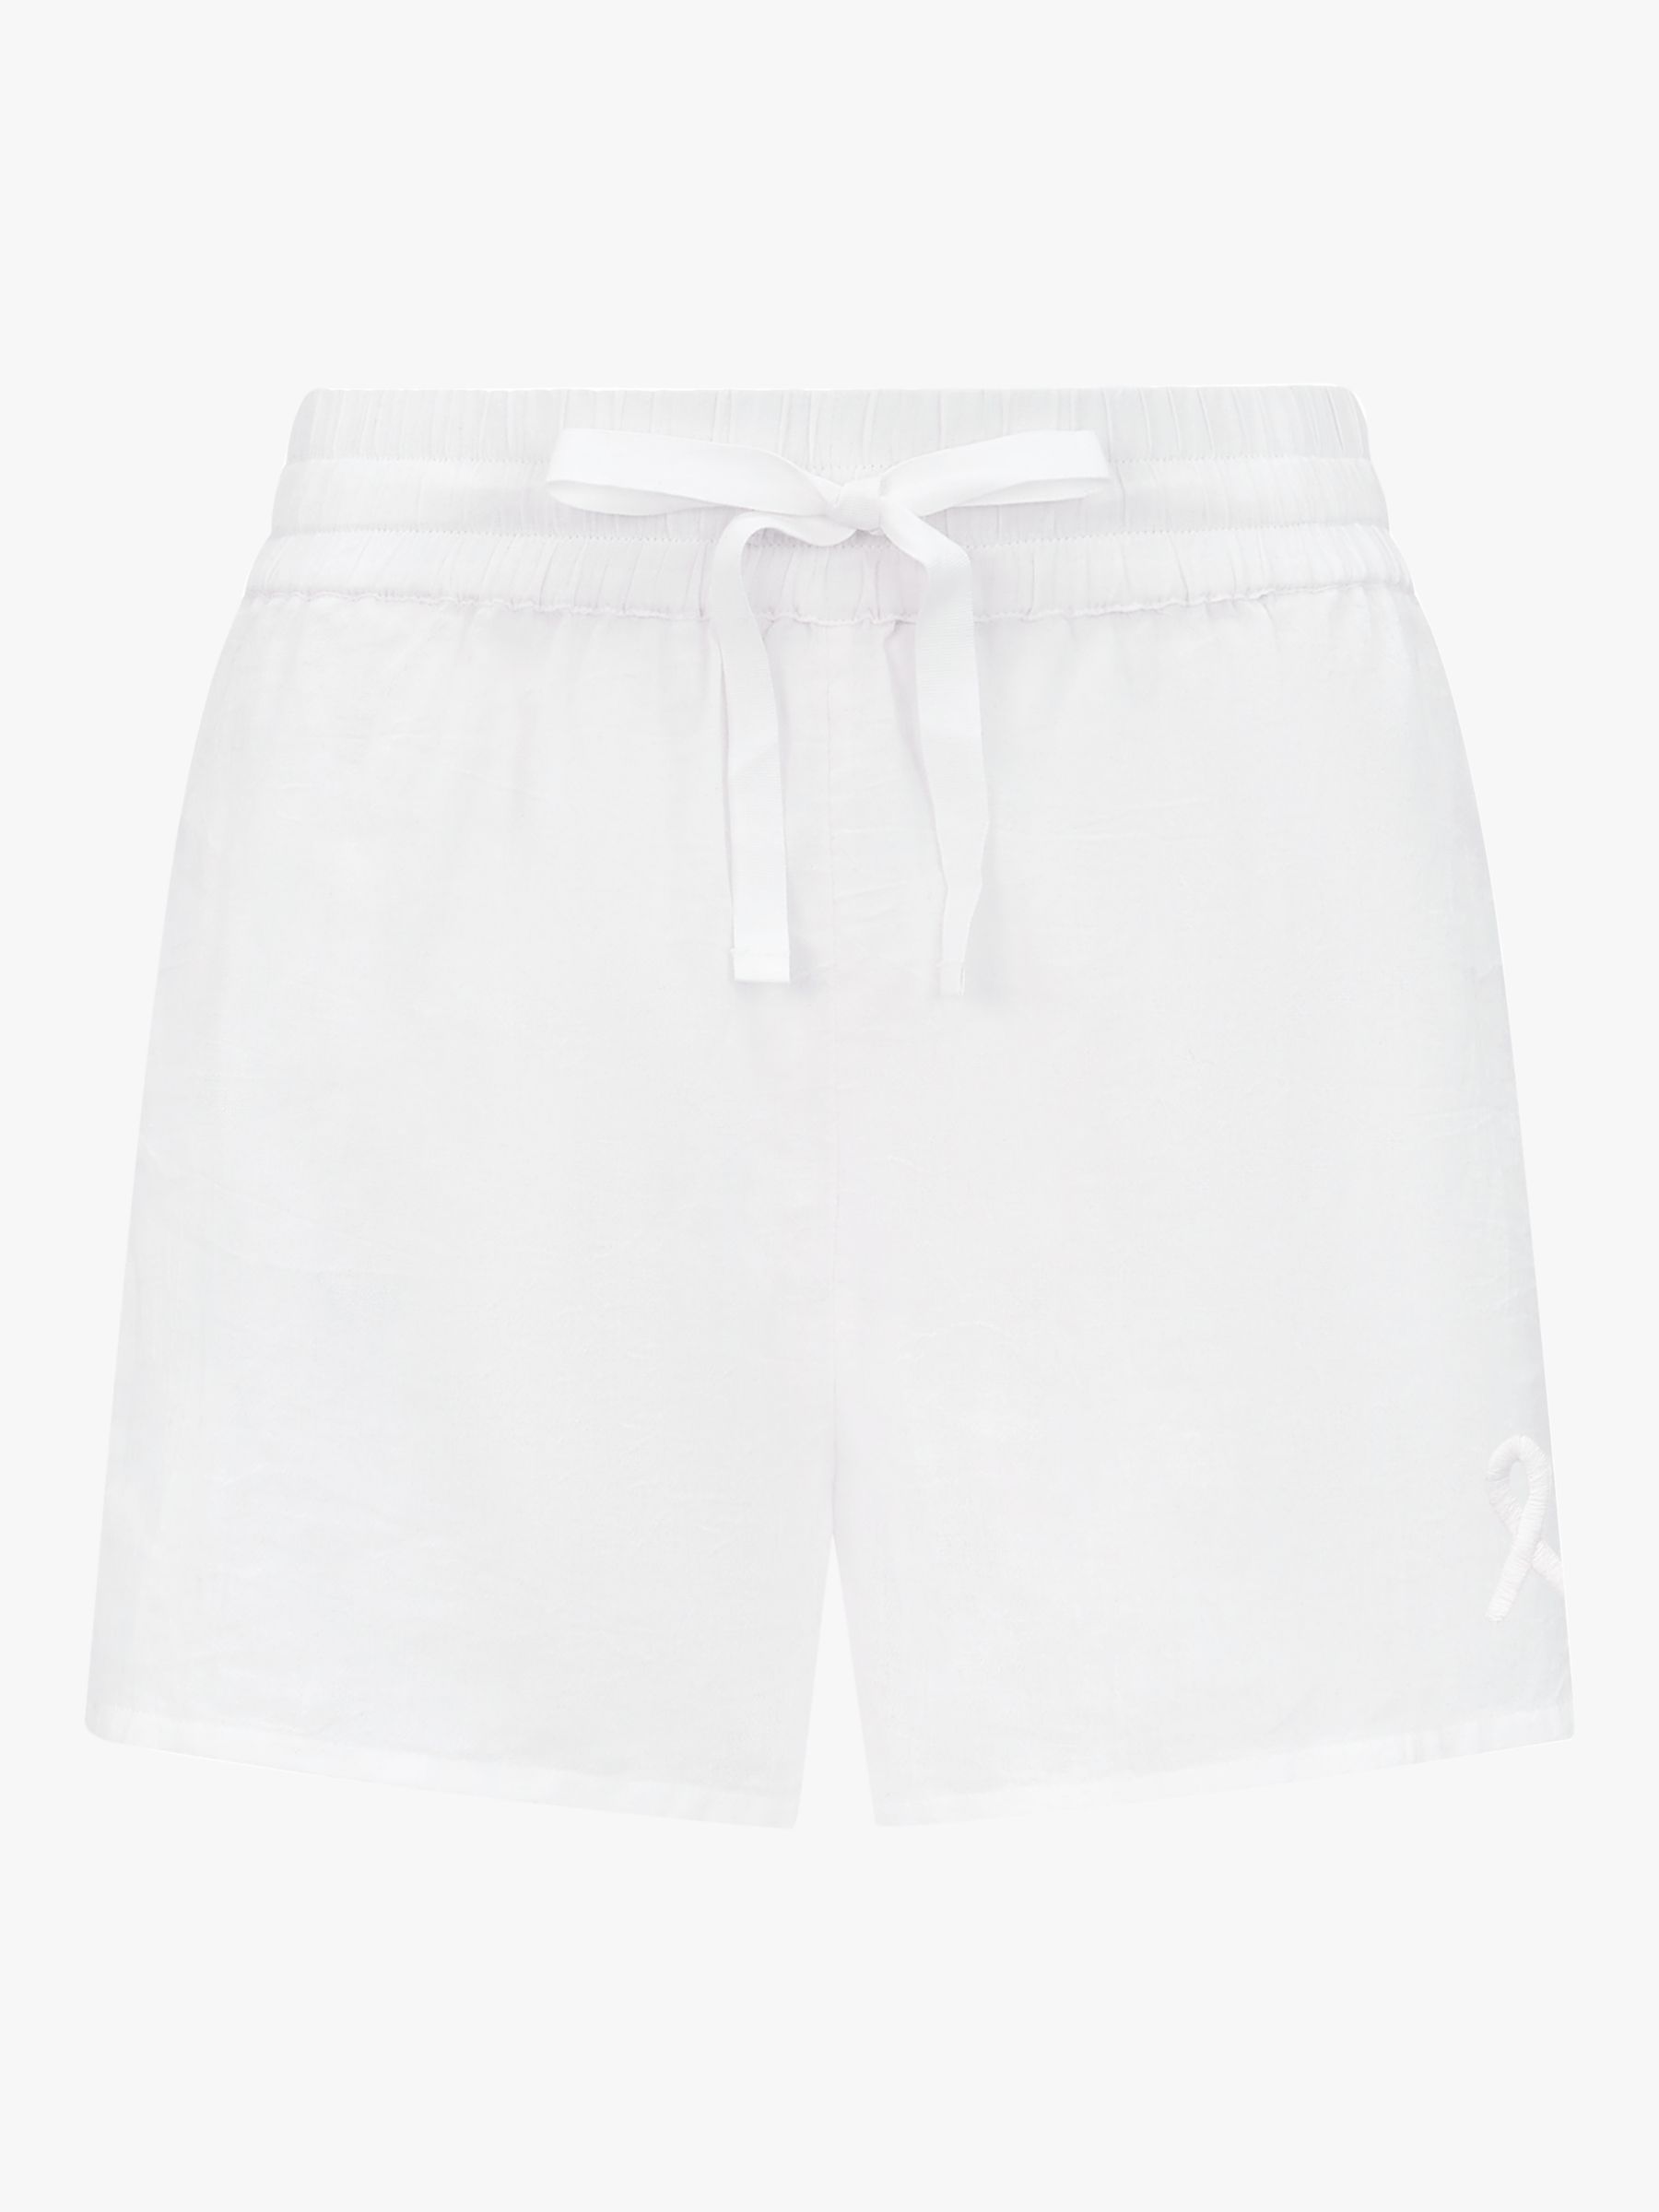 Nudea Boxer Pyjama Shorts, White, XS